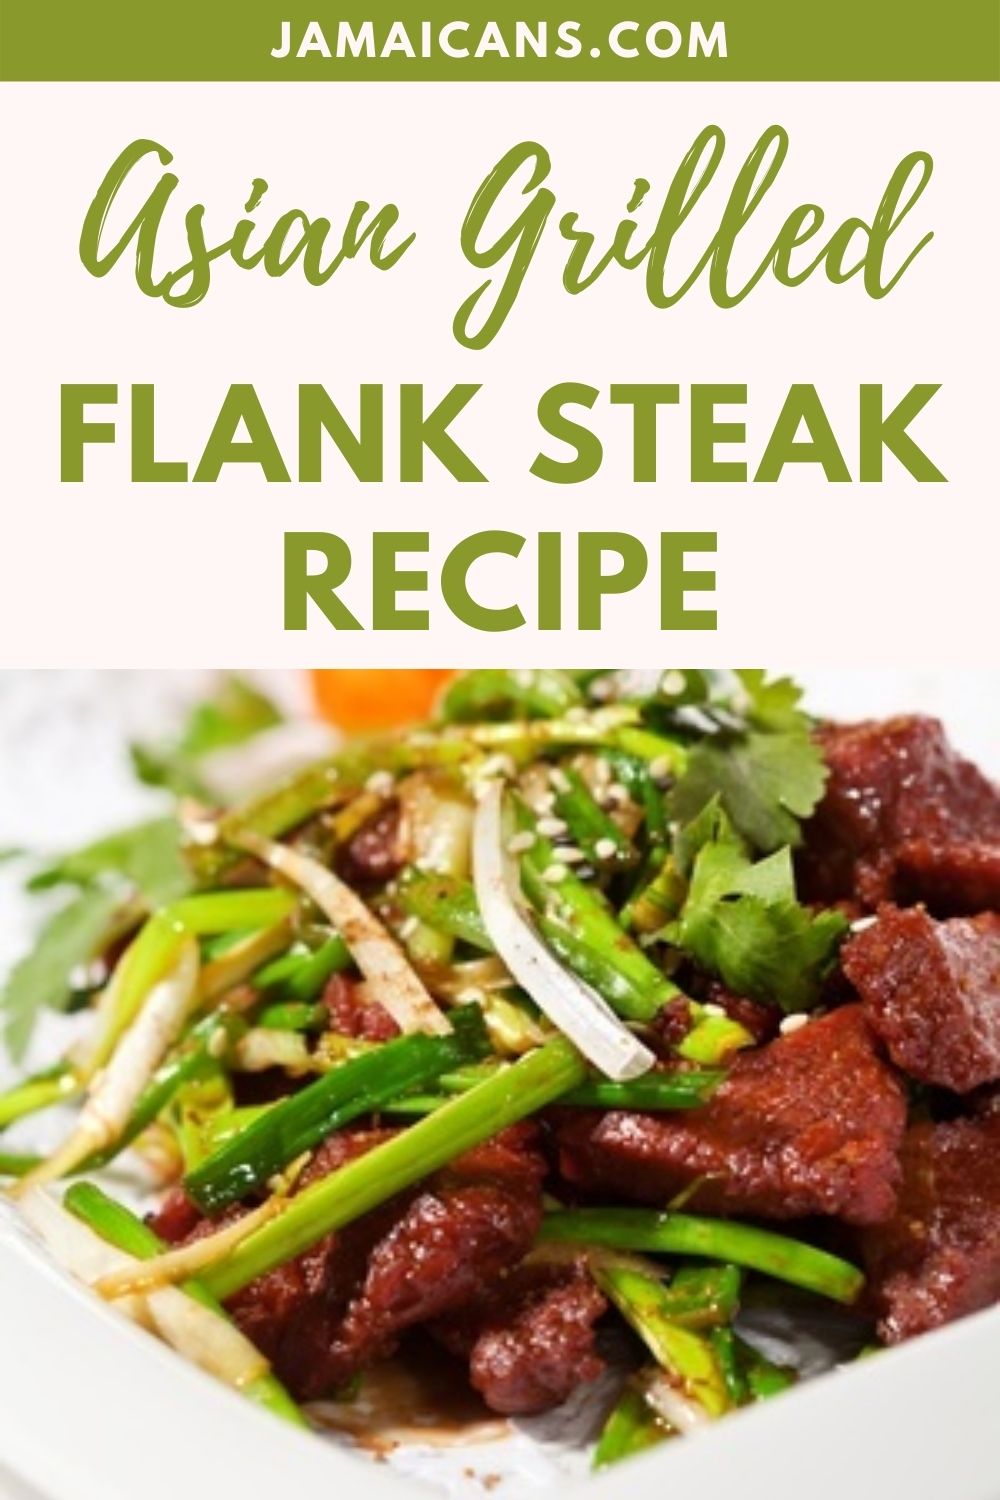 Asian Grilled Flank Steak Recipe